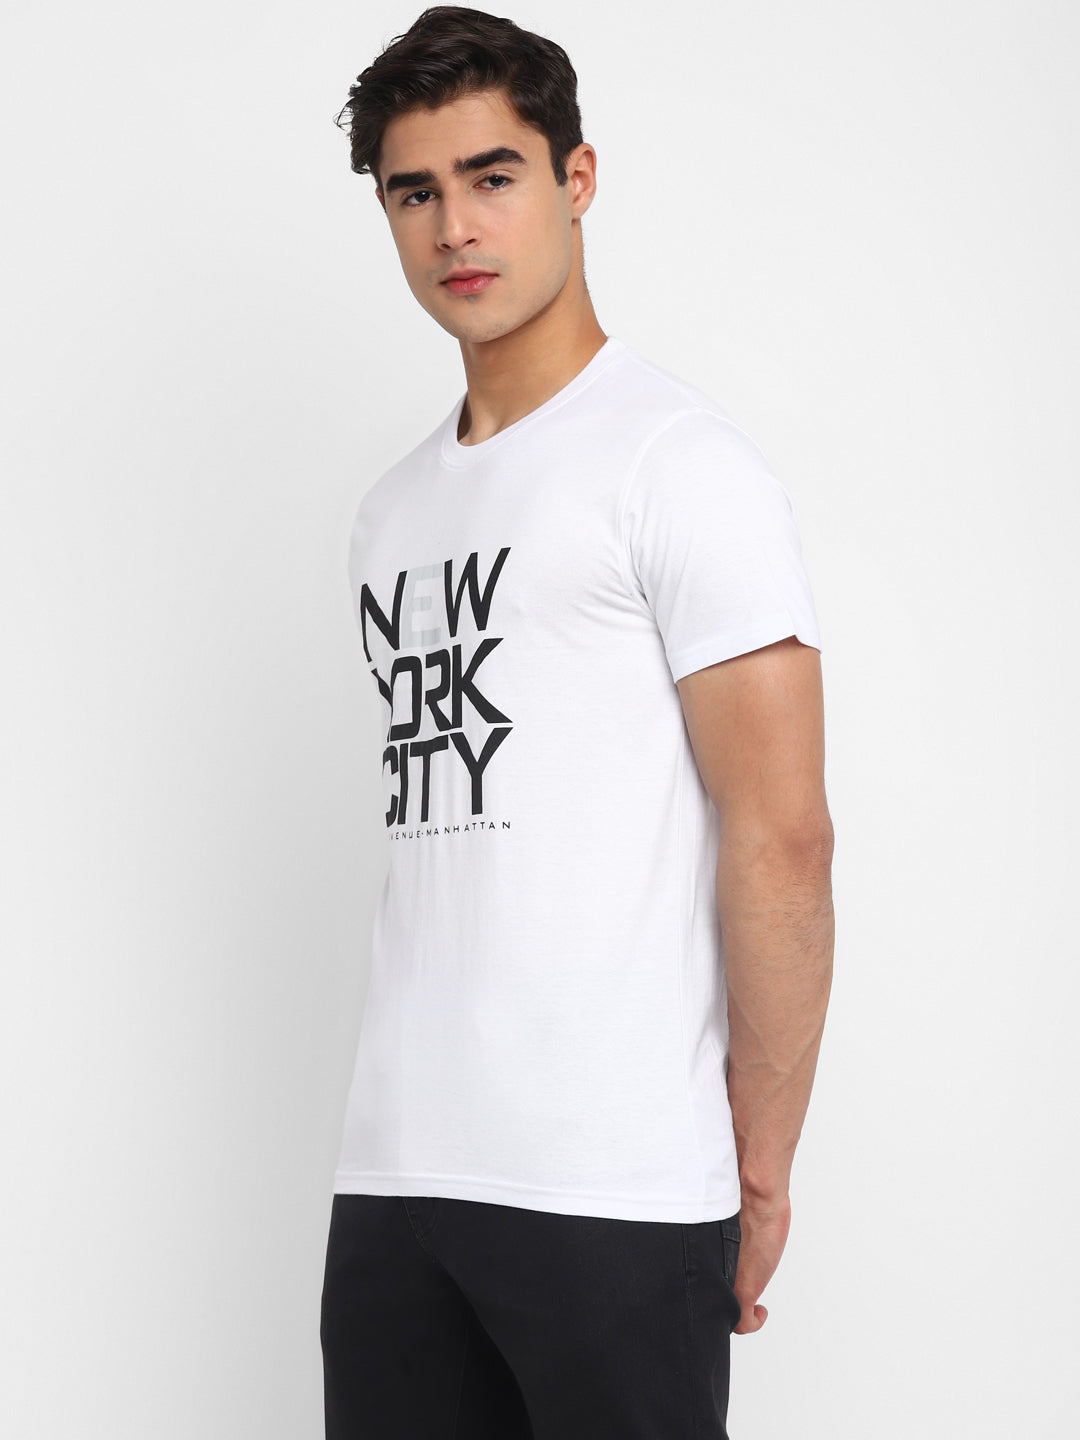 100% Cotton Printed Round Neck T-Shirt For Men - White